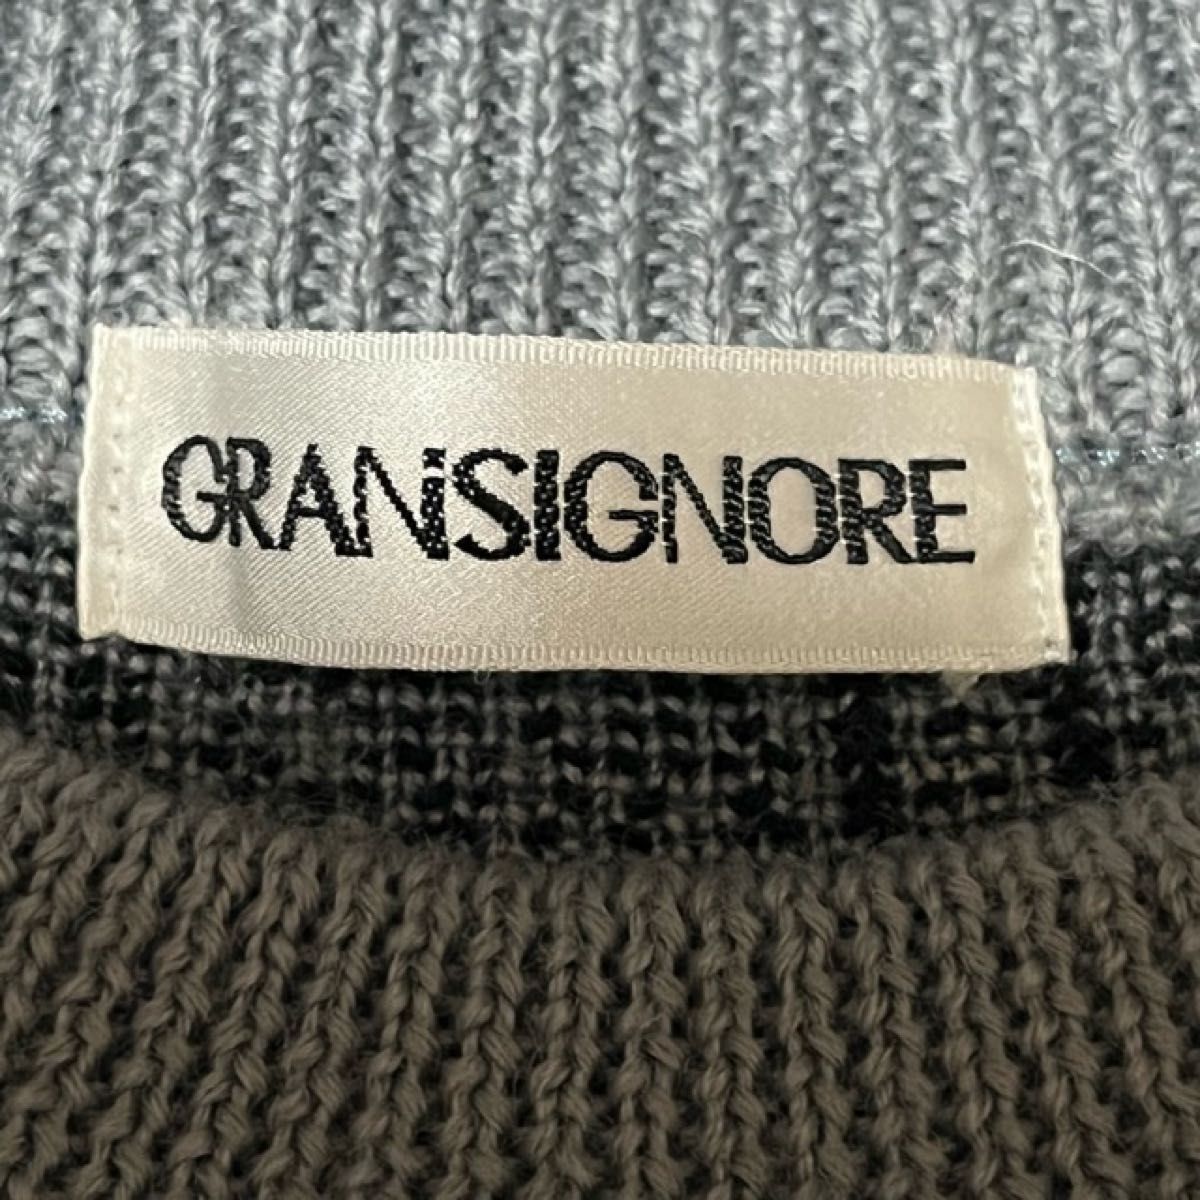 GRANSIGNORE 新品 SALE!! 50%OFF 半額 送料無料 クルーネックセーター 